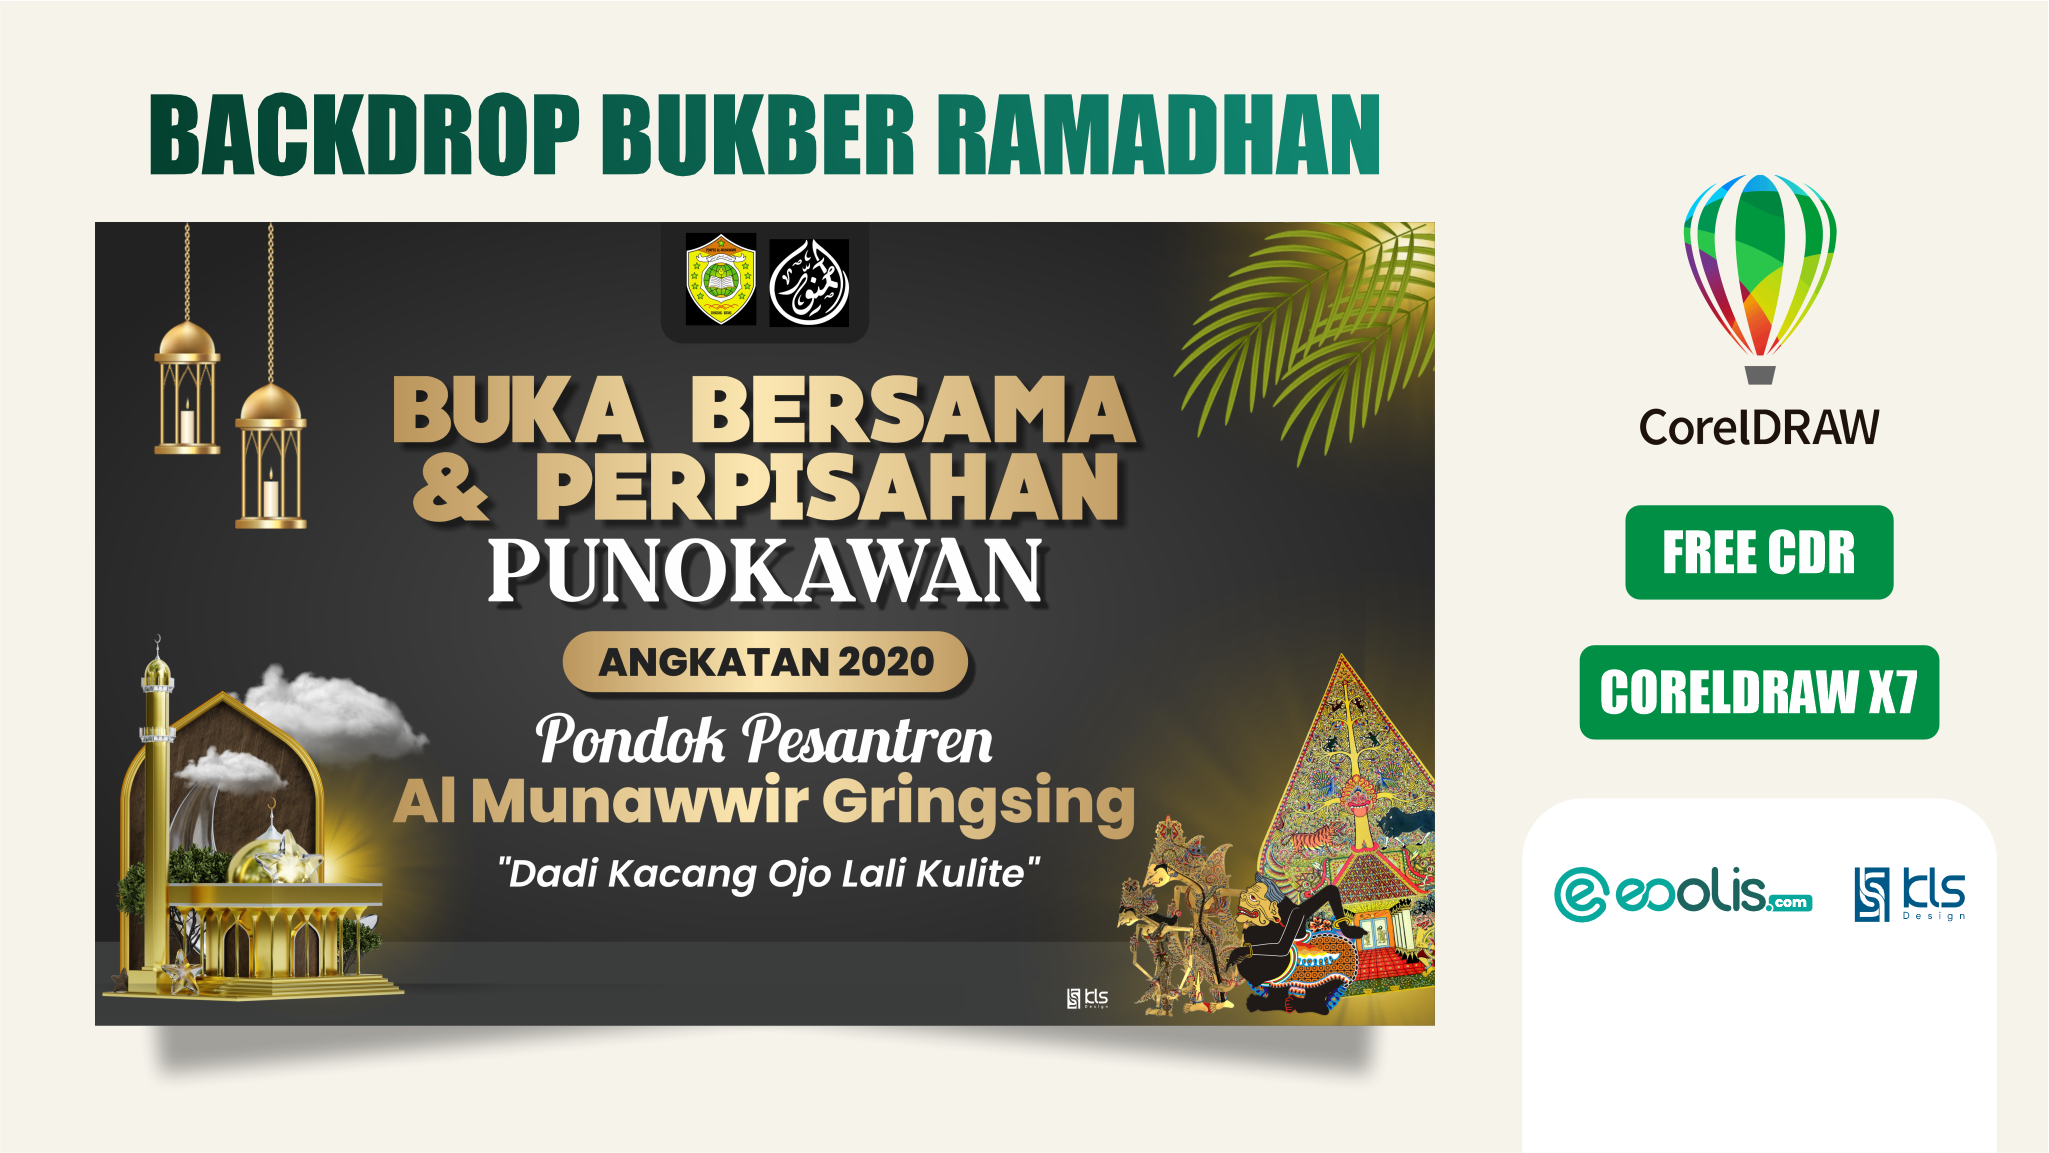 Free CDR - Desain Banner Backdrop Bukber Ramadhan eoolis